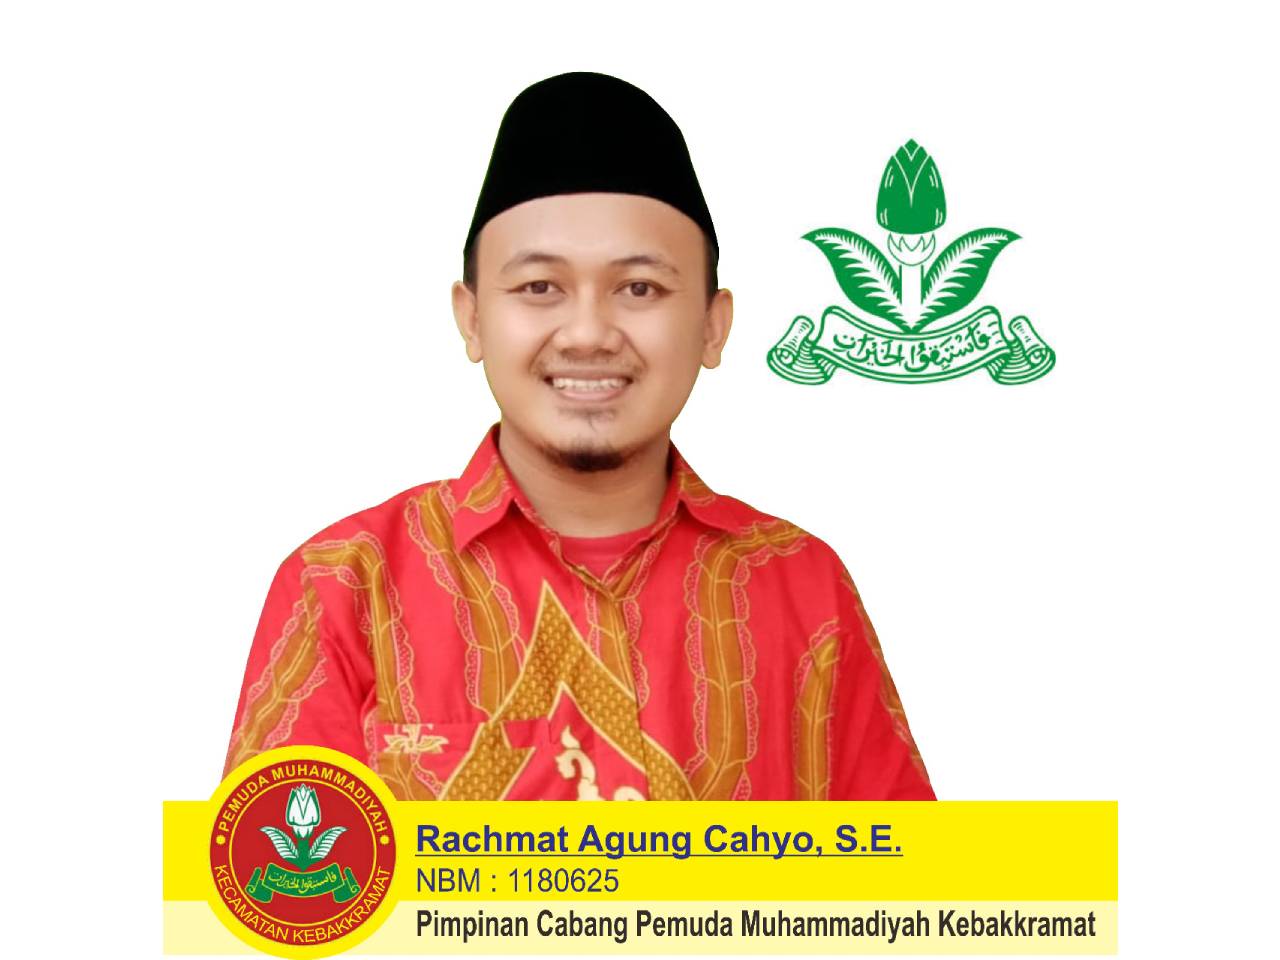 Rachamat Agung Cahyo, S.E. Pimpinan Cabang Pemuda Muhammadiyah Kebakkramat